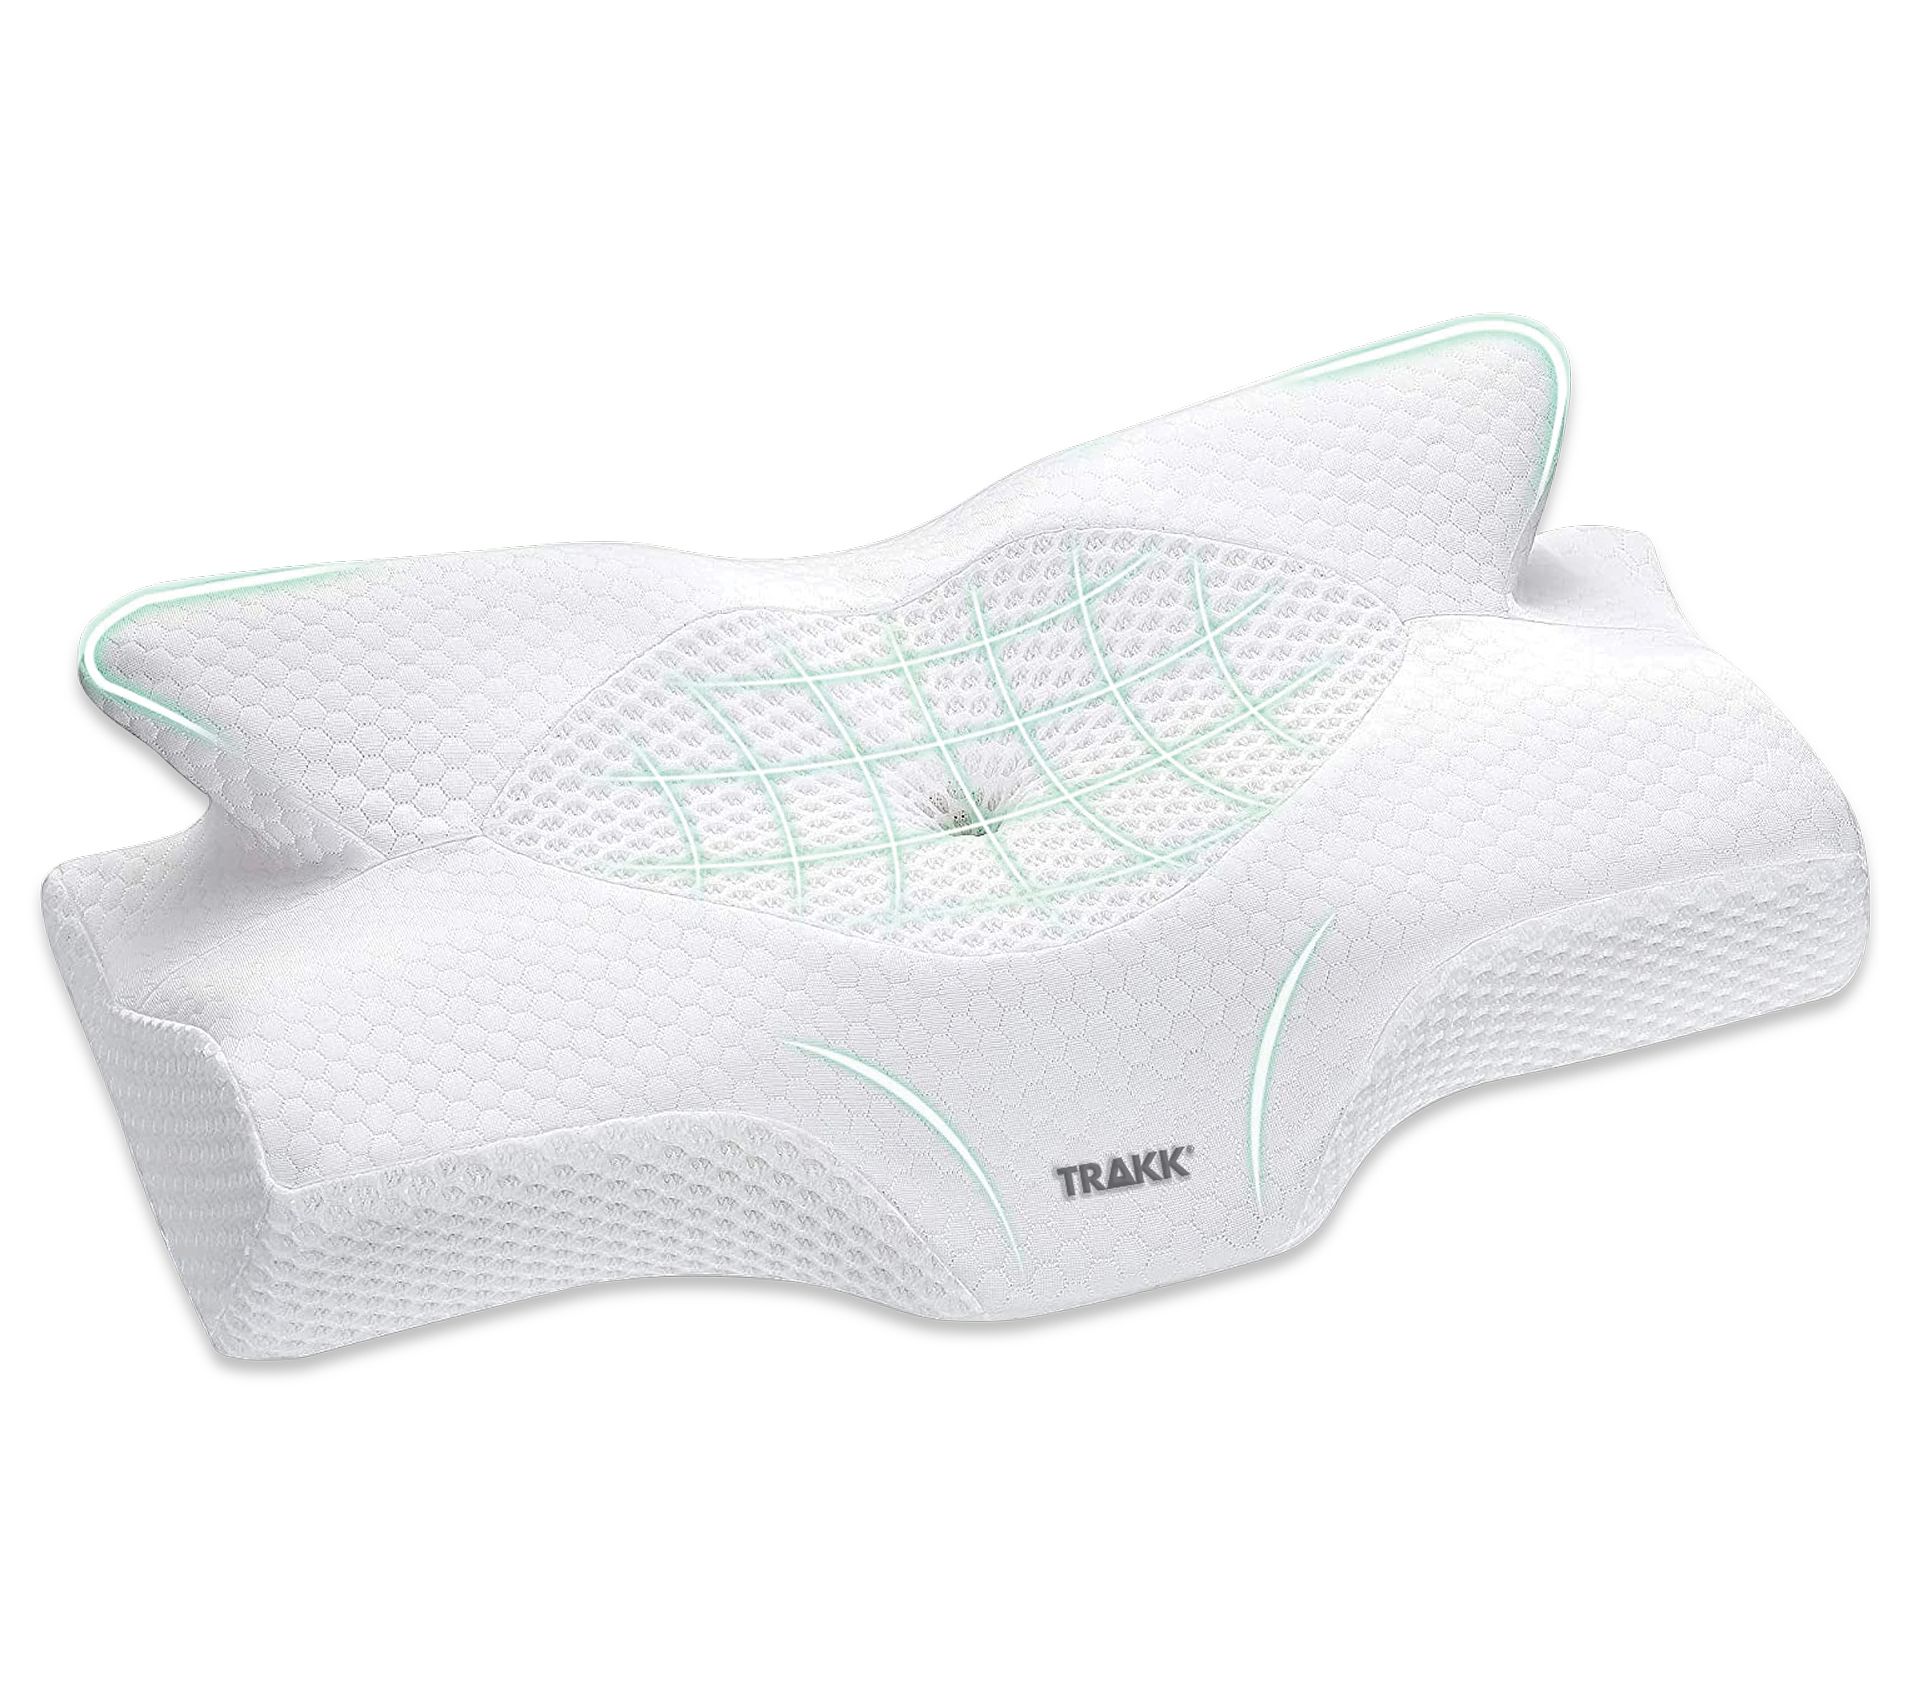 Trakk Memory Foam Orthopedic Seat Cushion, Bed Pillows, Household